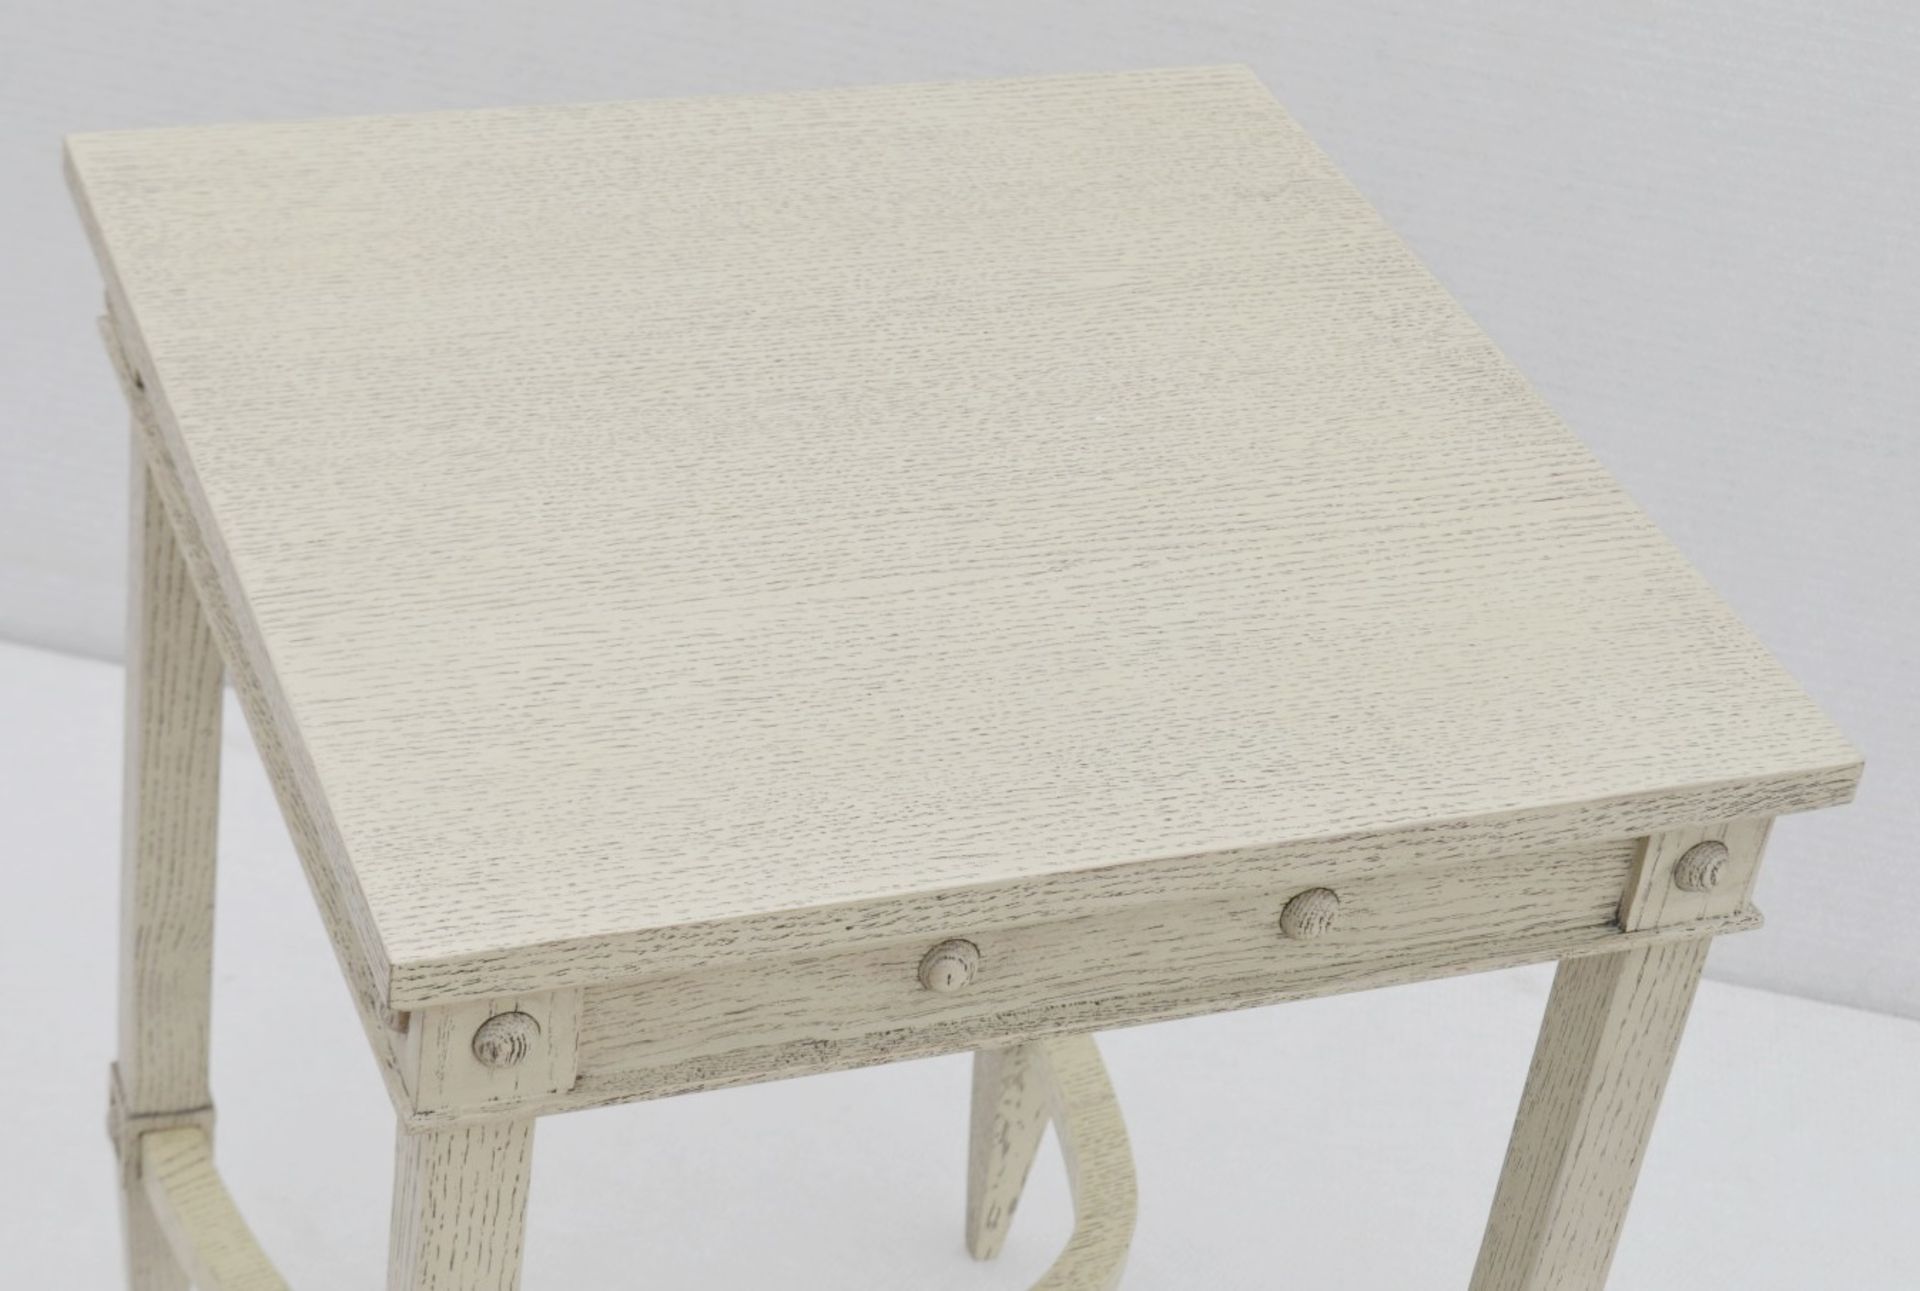 1 x JUSTIN VAN BREDA 'Thomas' Designer Georgian-inspired Table In Limed Grey Oak - RRP £1,320 - Image 3 of 6